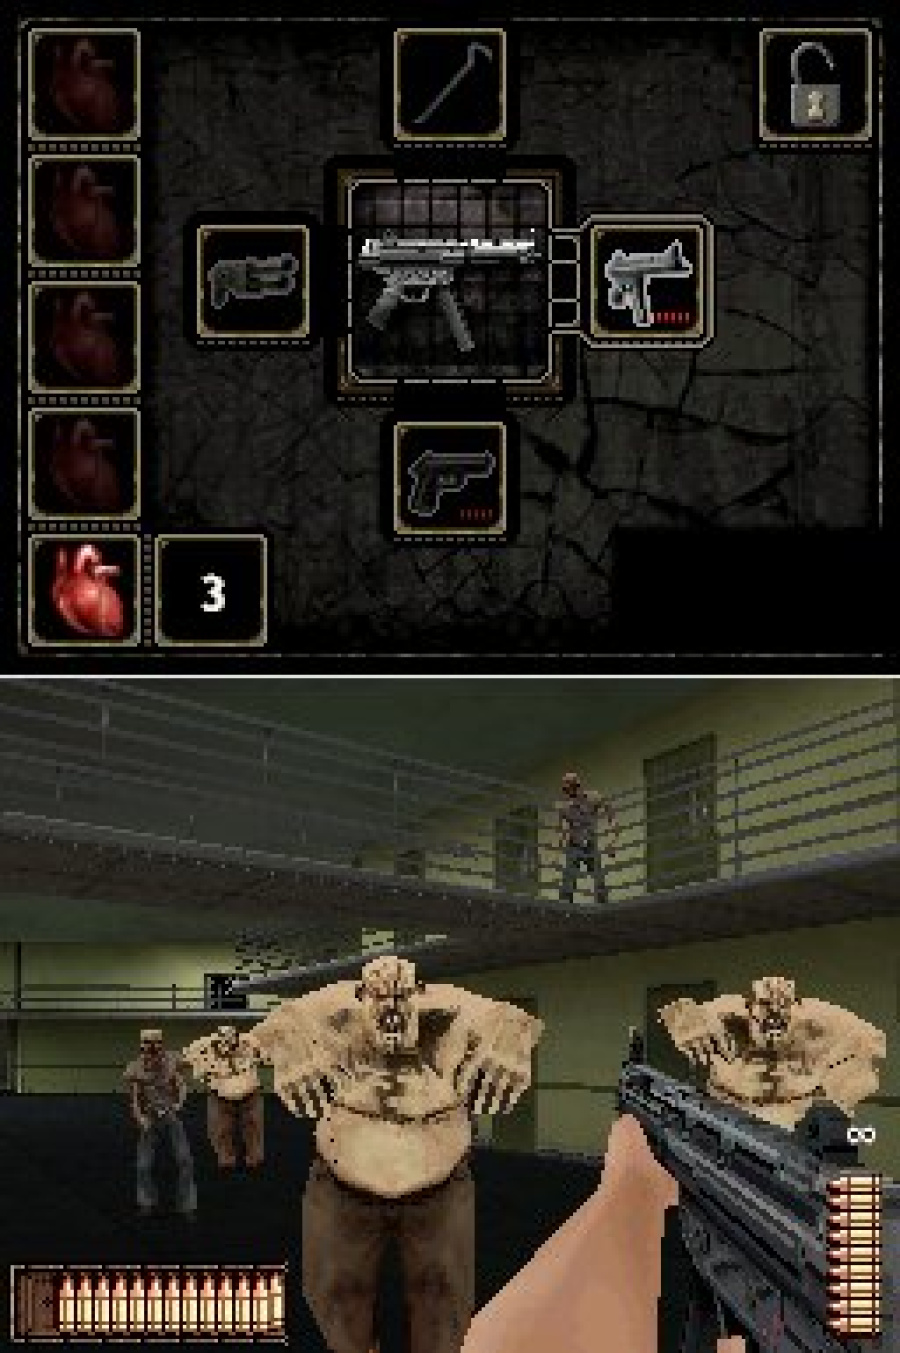 Dead N Furious (2007) DS Screenshots